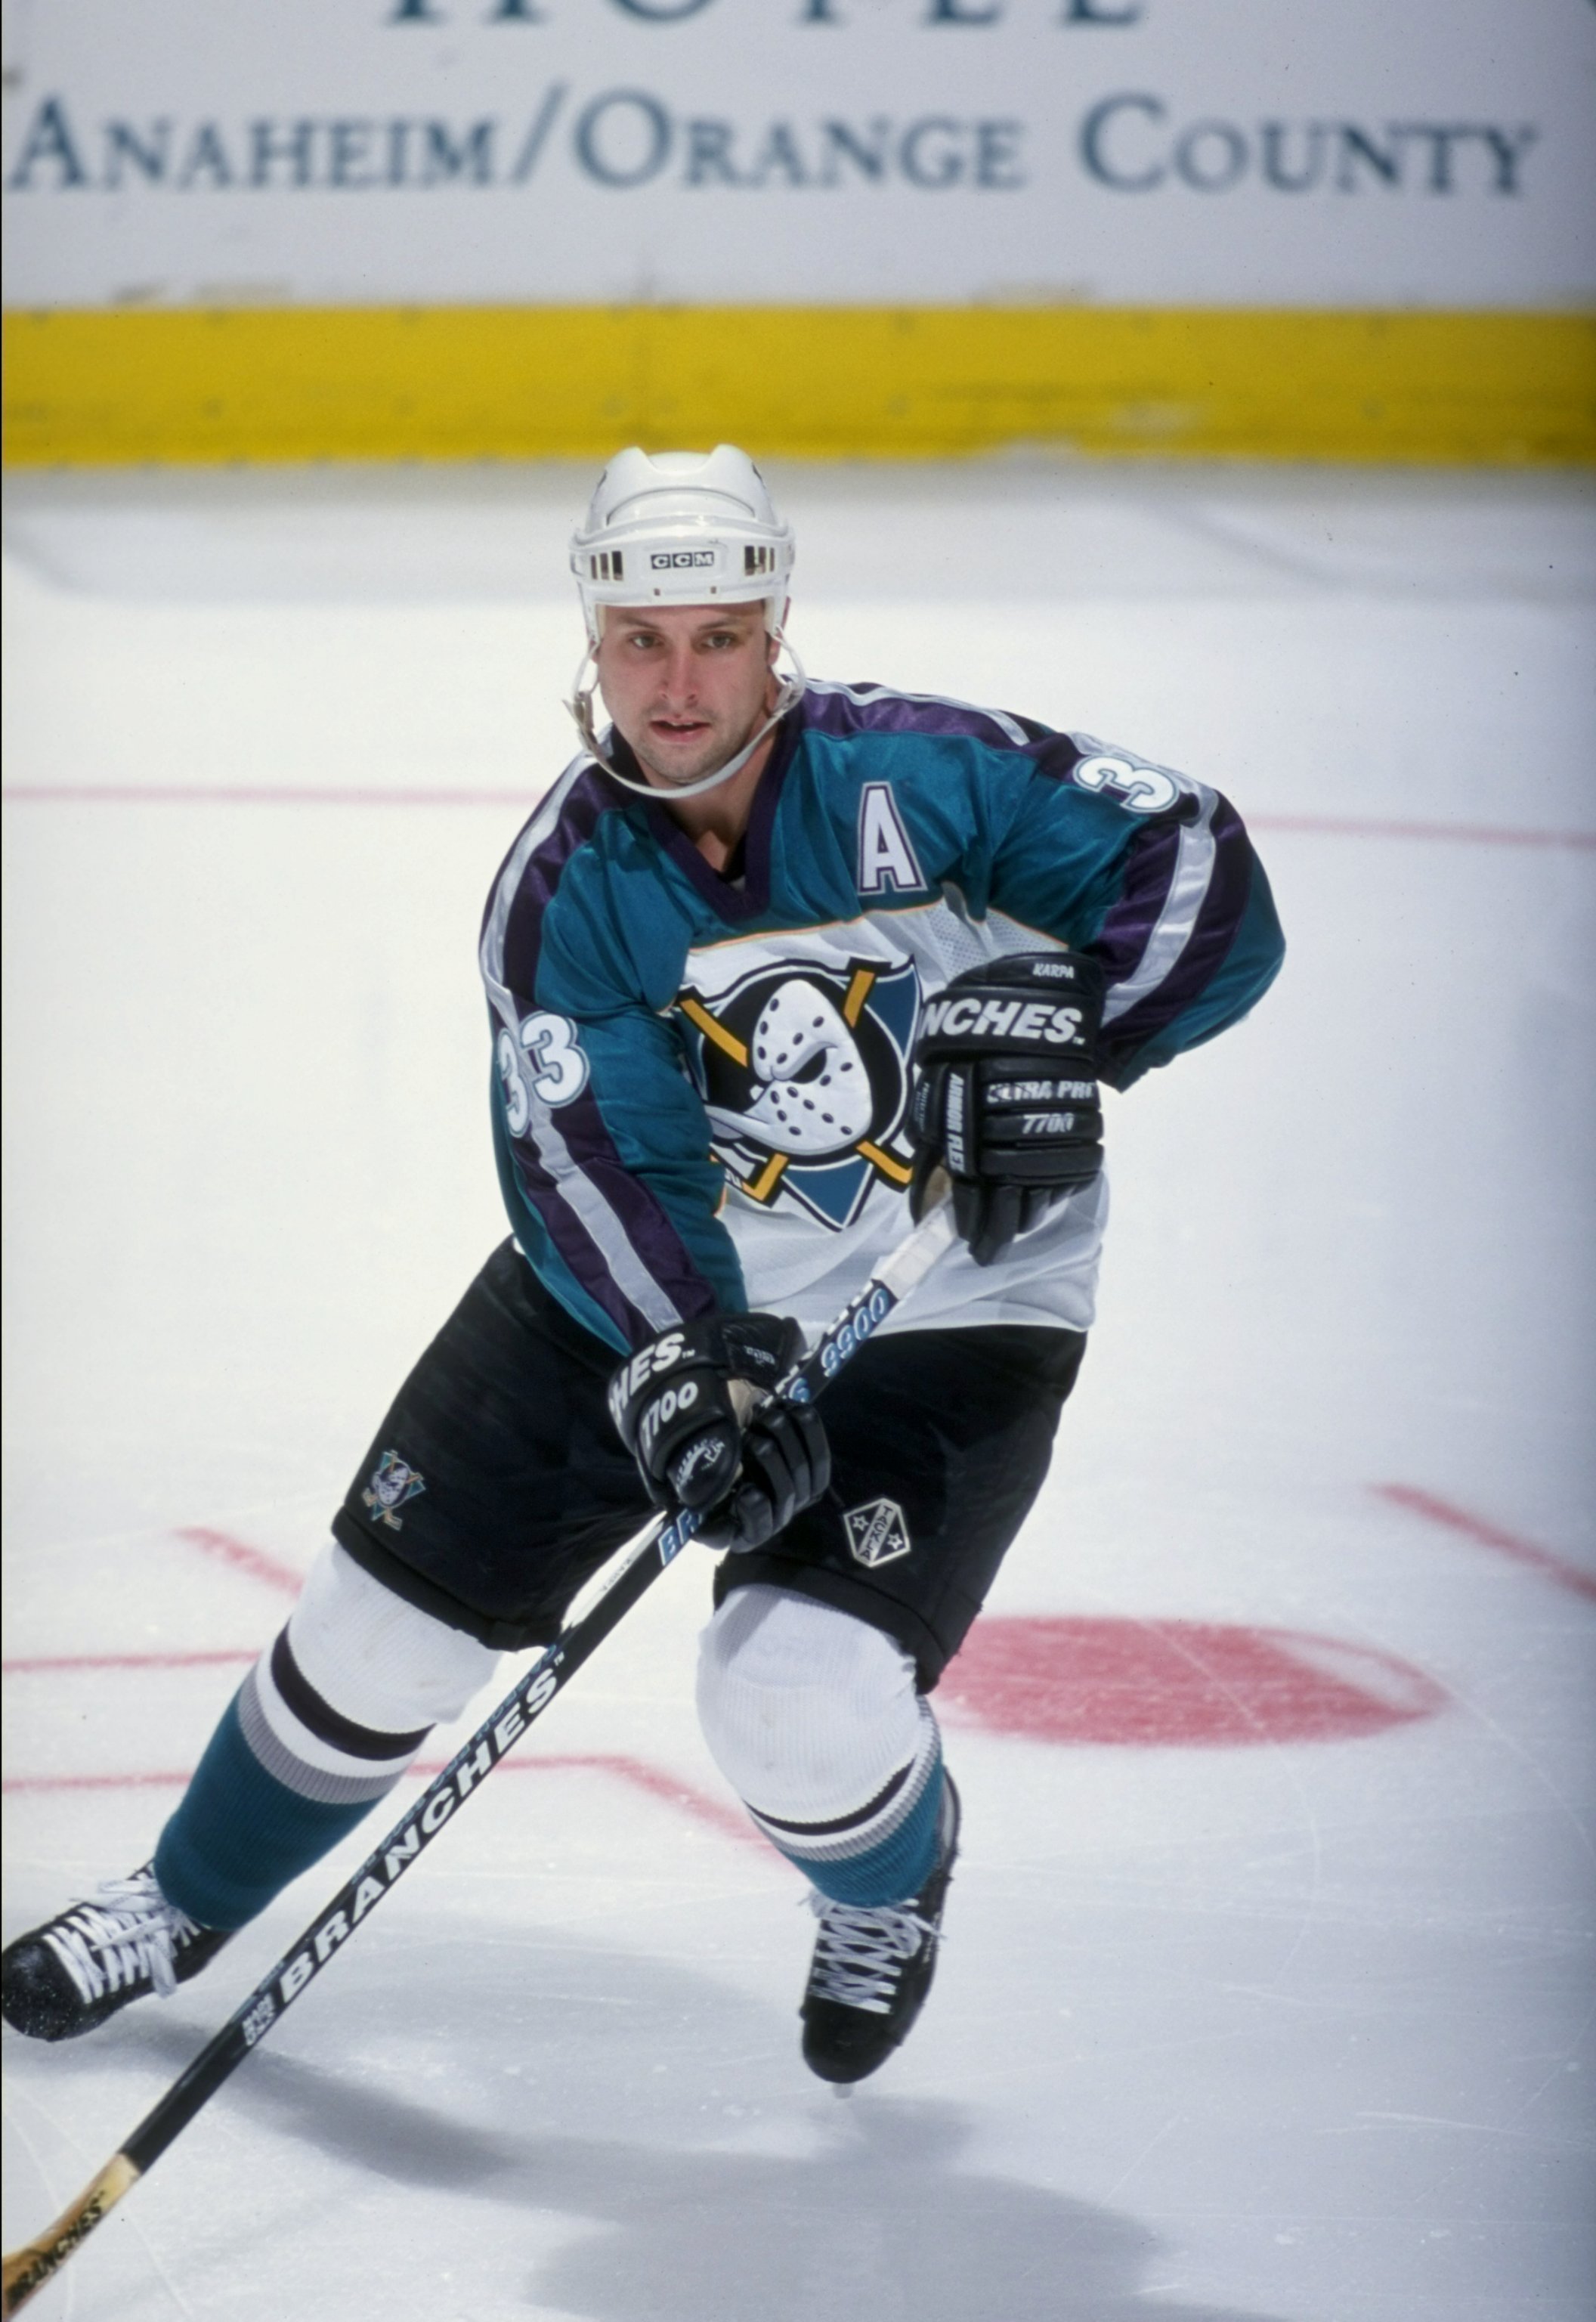 2001-02 Paul Kariya Anaheim Mighty Ducks Game Worn Jersey